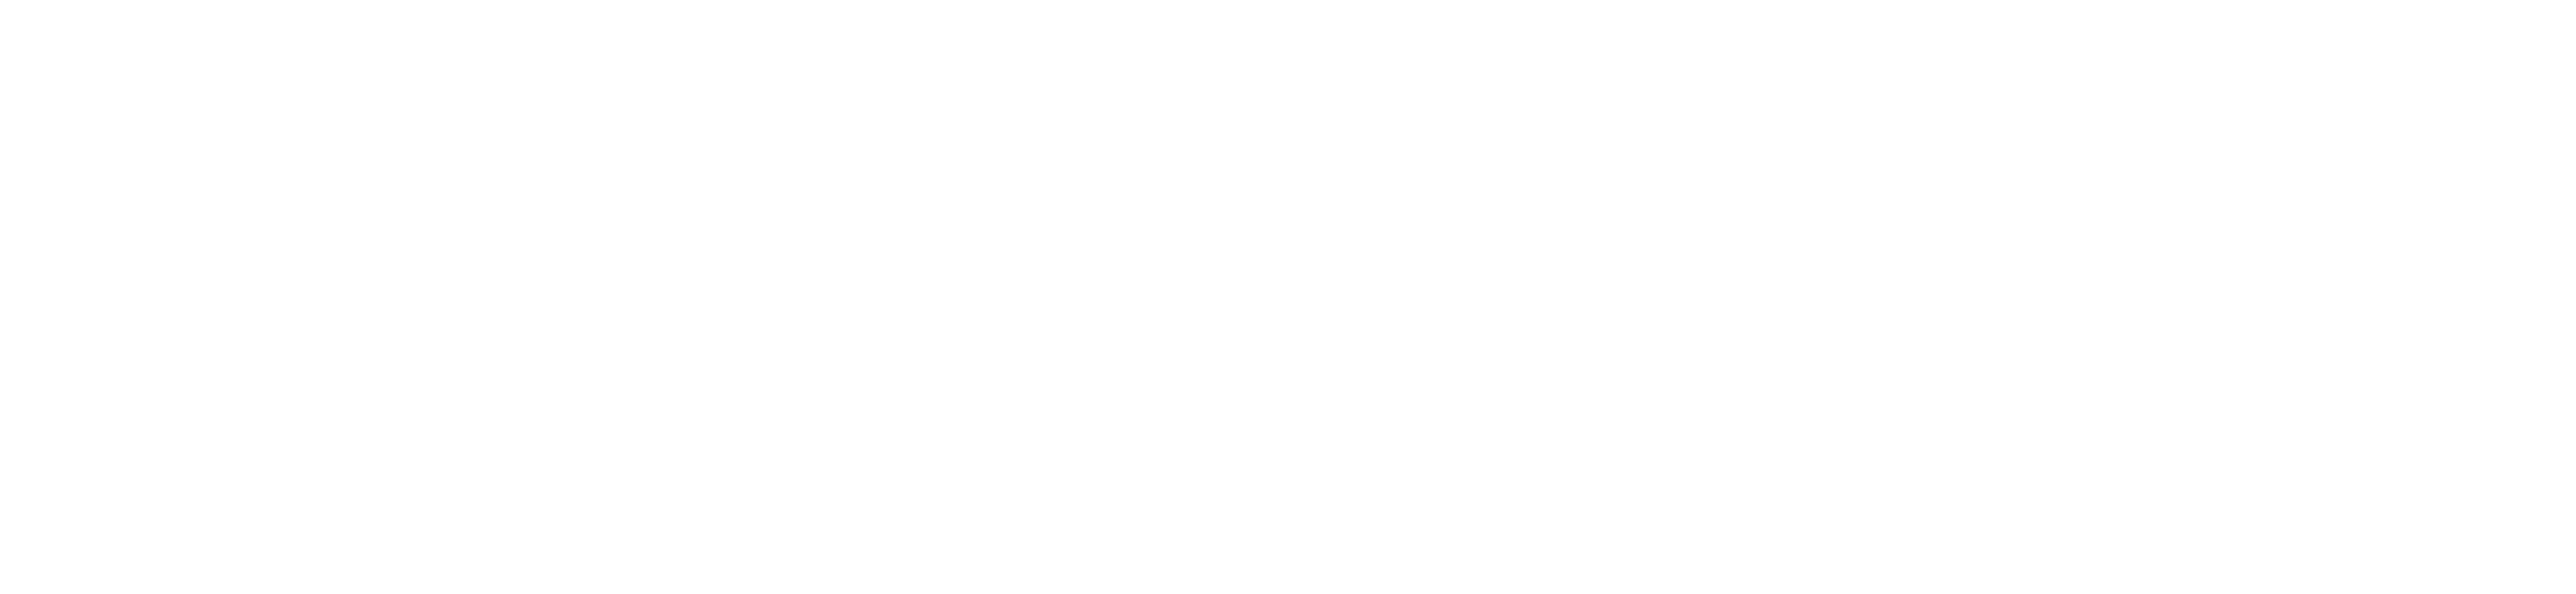 The Killer is Still Among Us